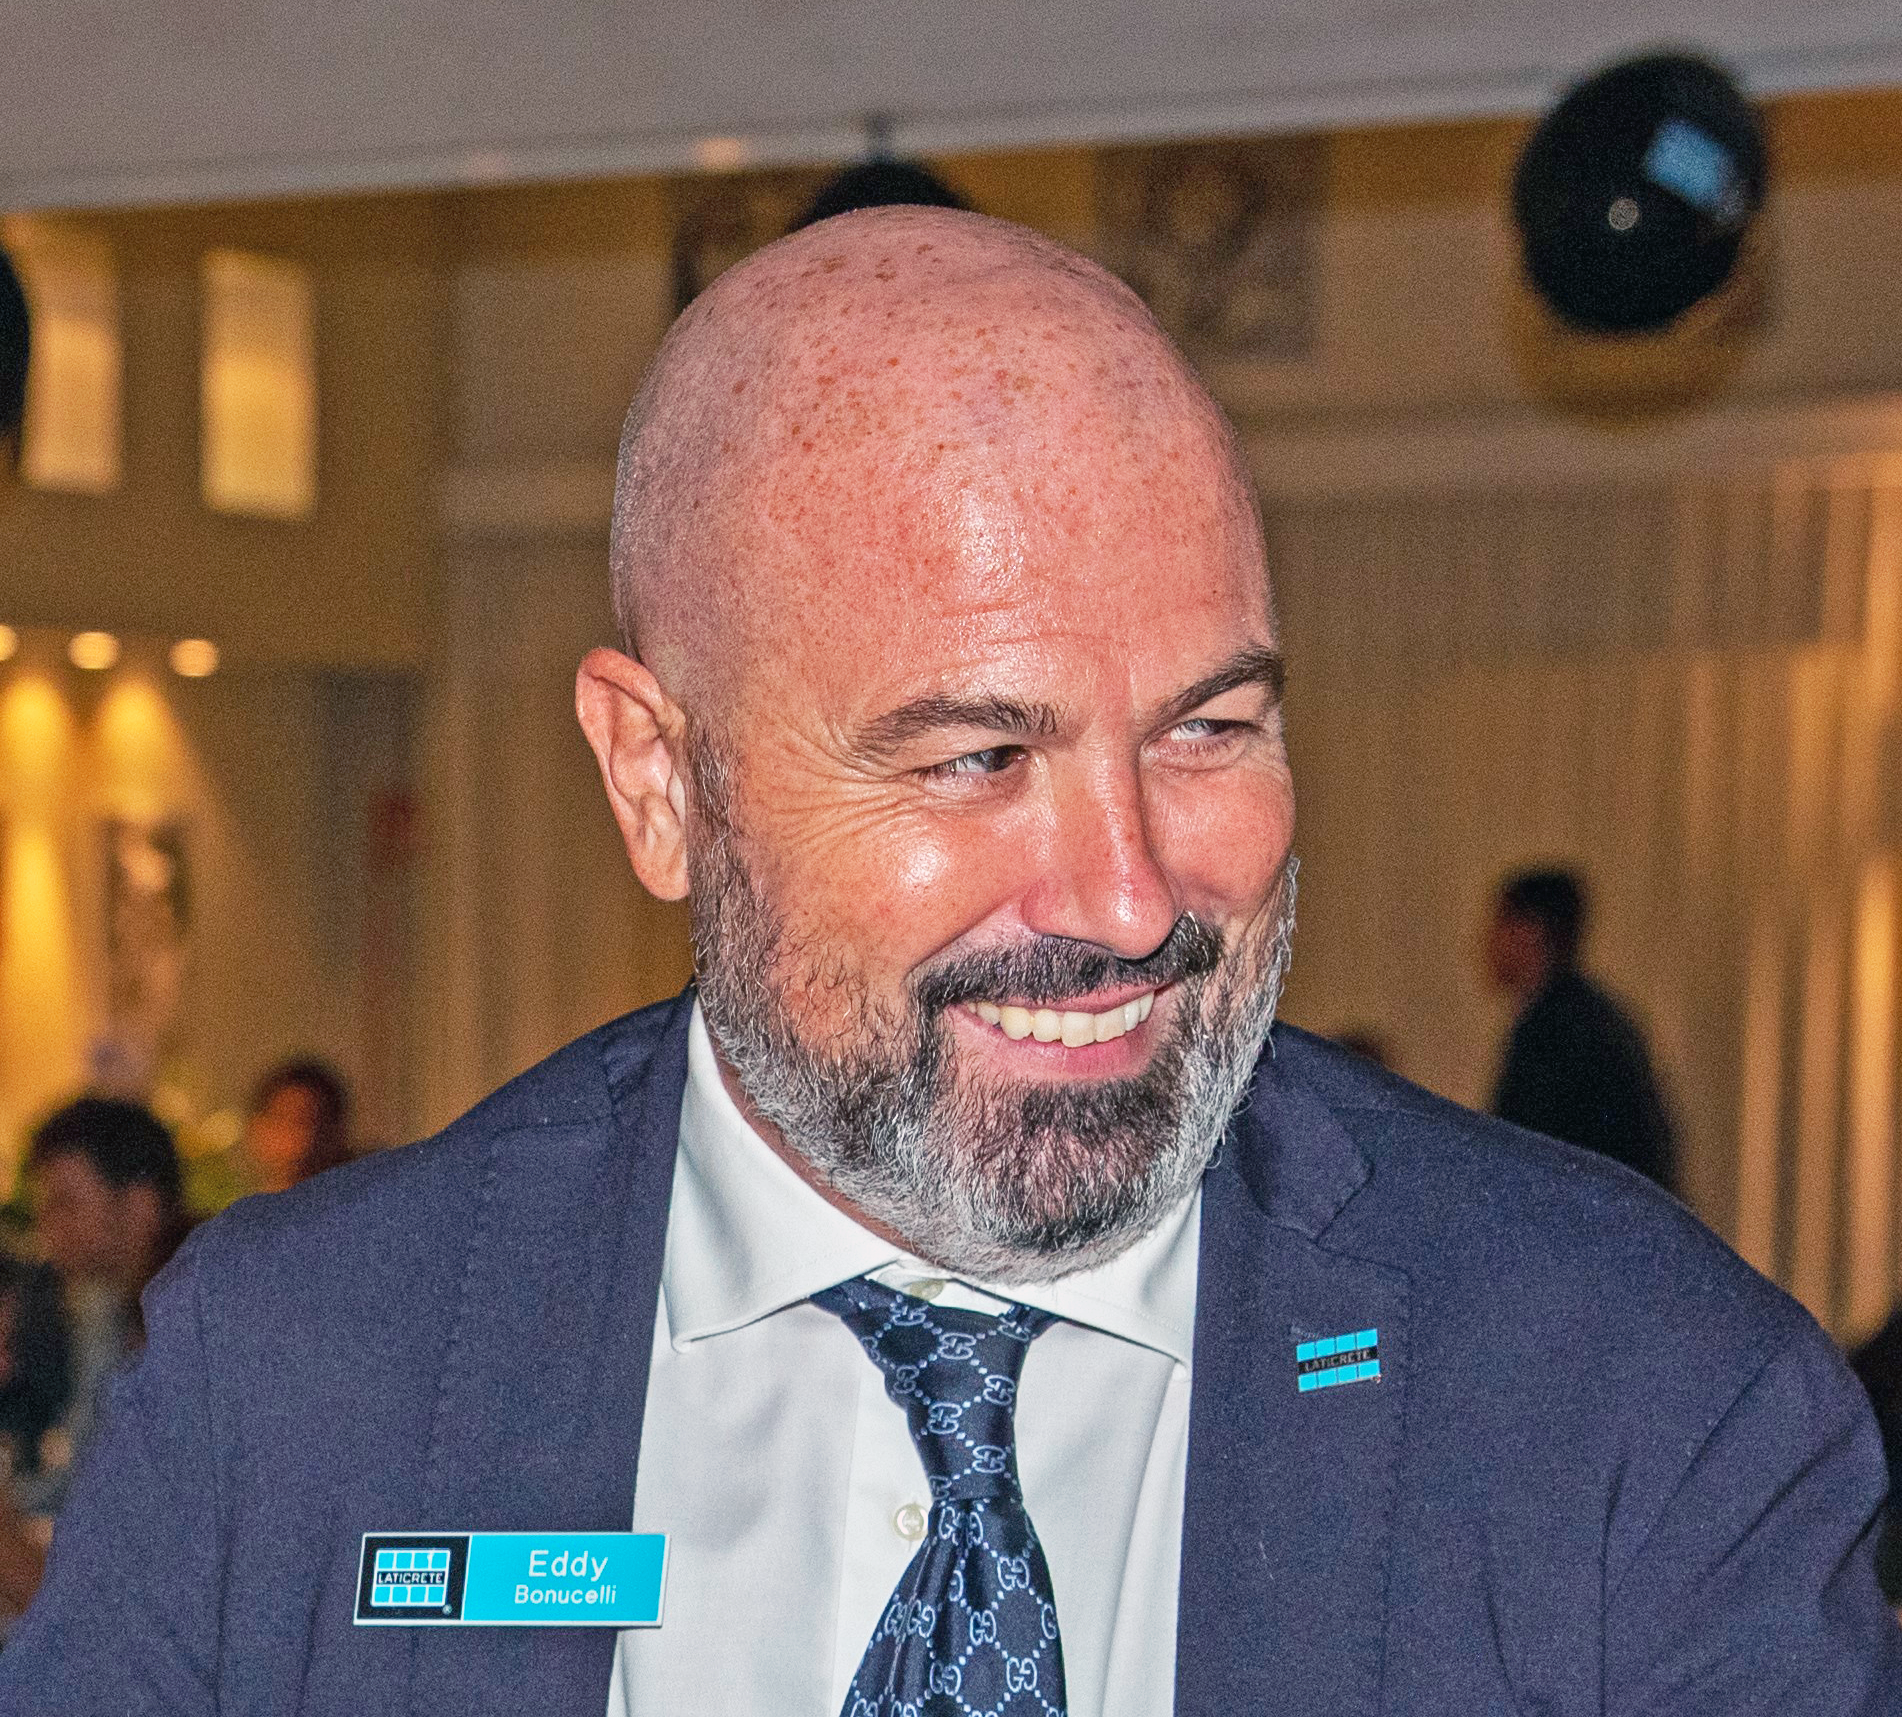 Eddy Bonucelli, Director regional de Europa